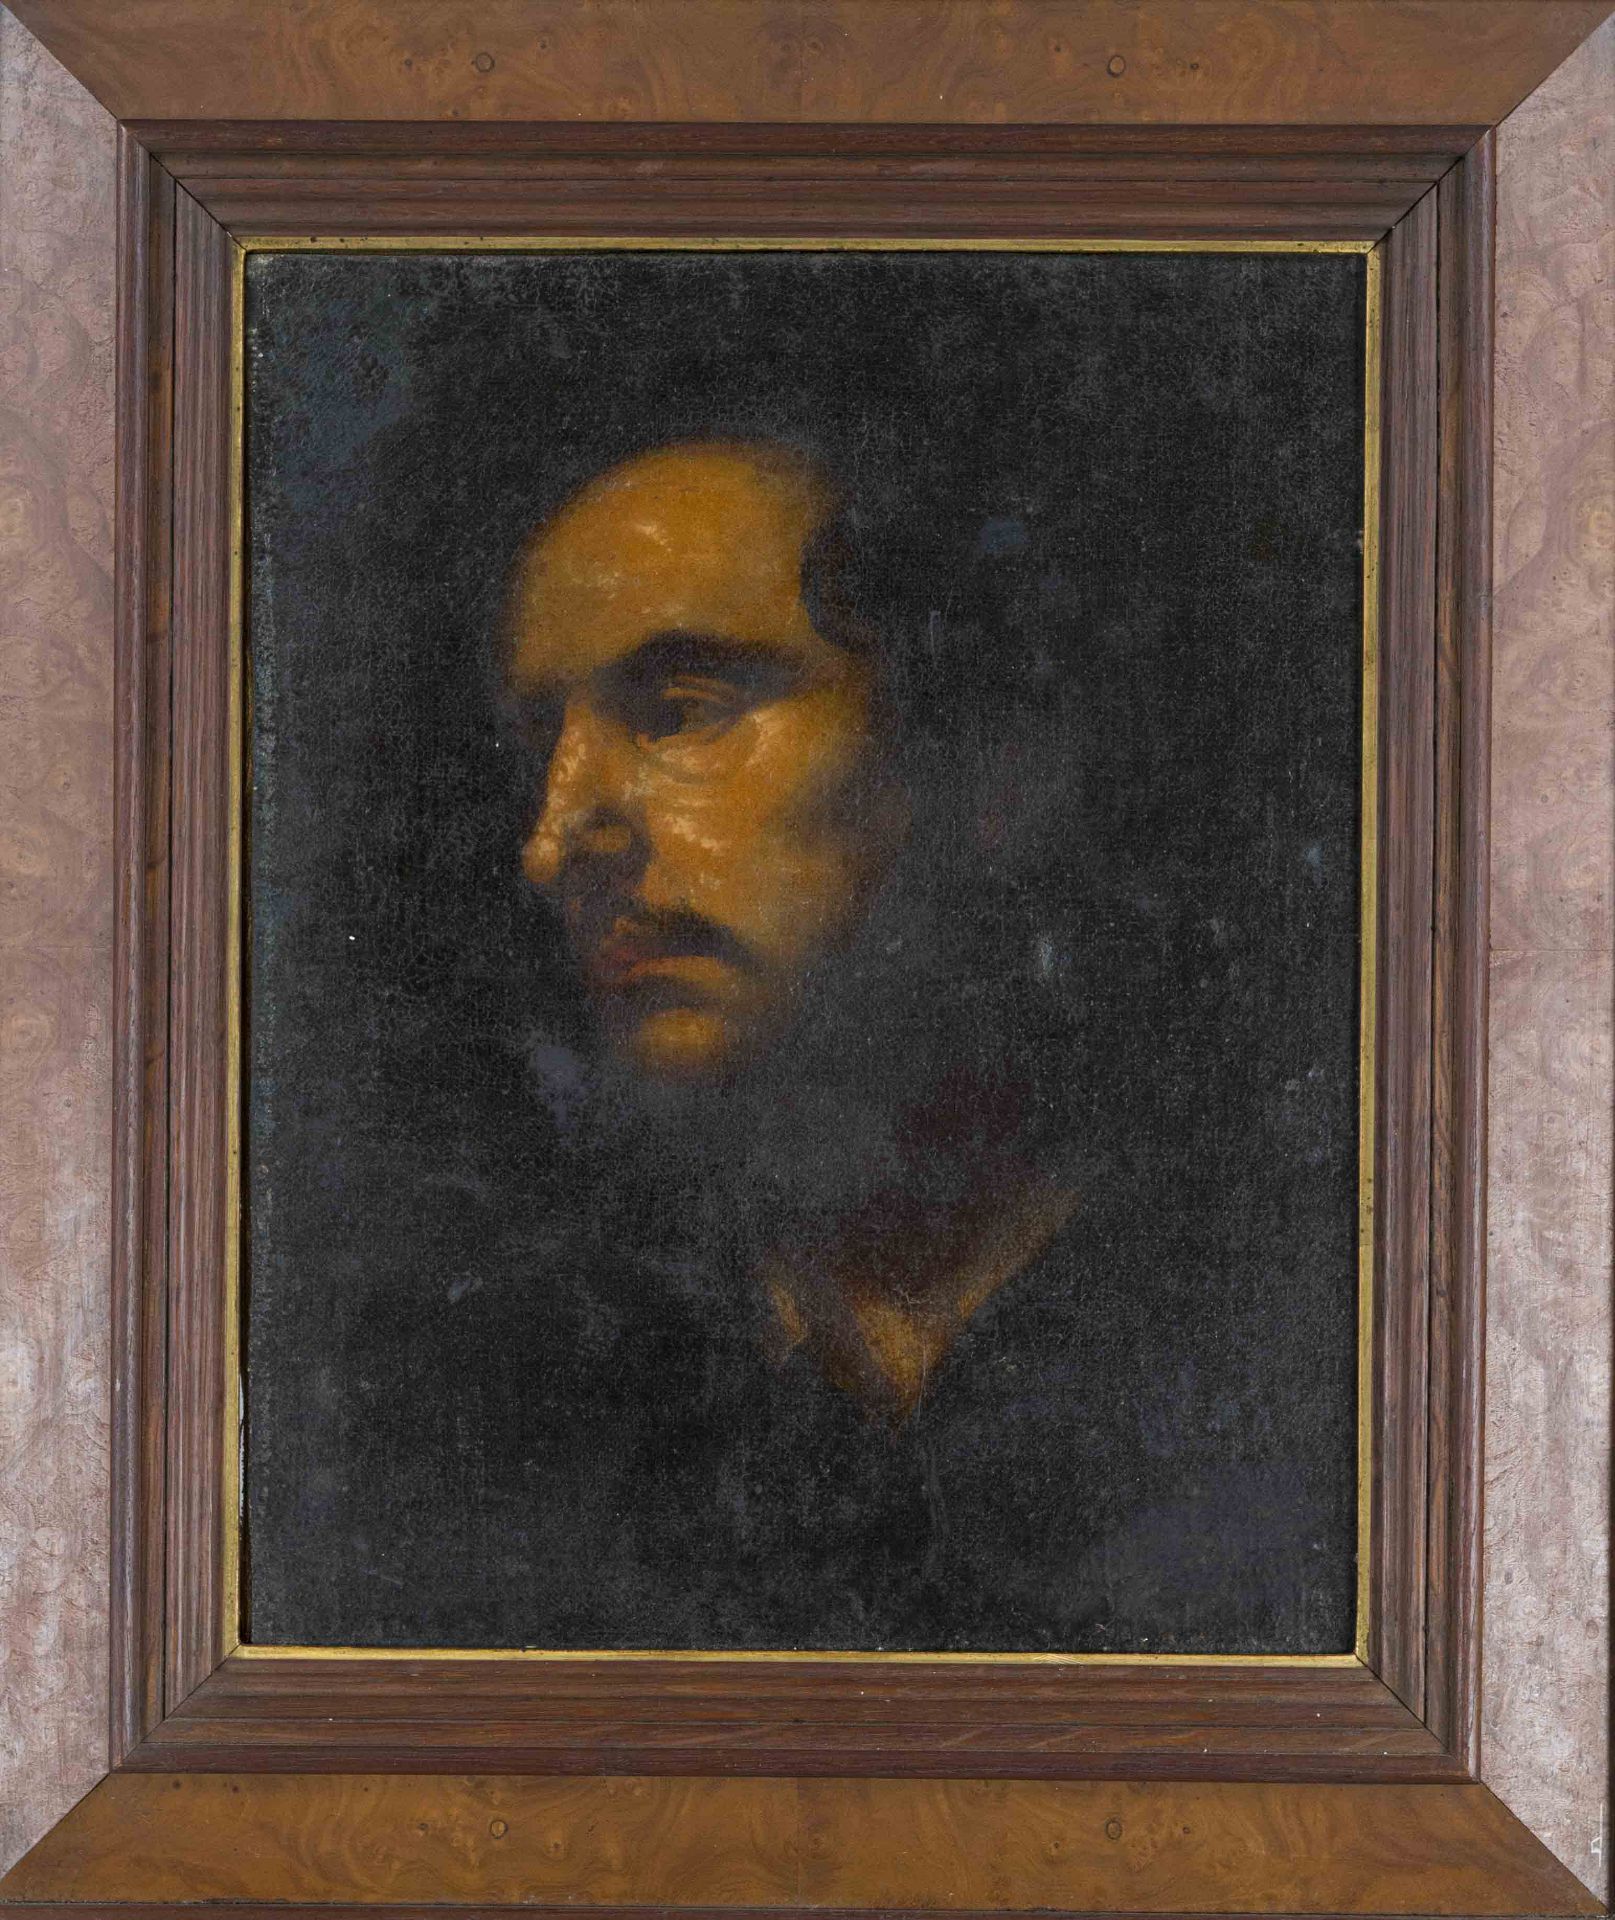 Anonymous portrait painter probably 19th century (earlier?), Portrait of a man, oil on canvas,